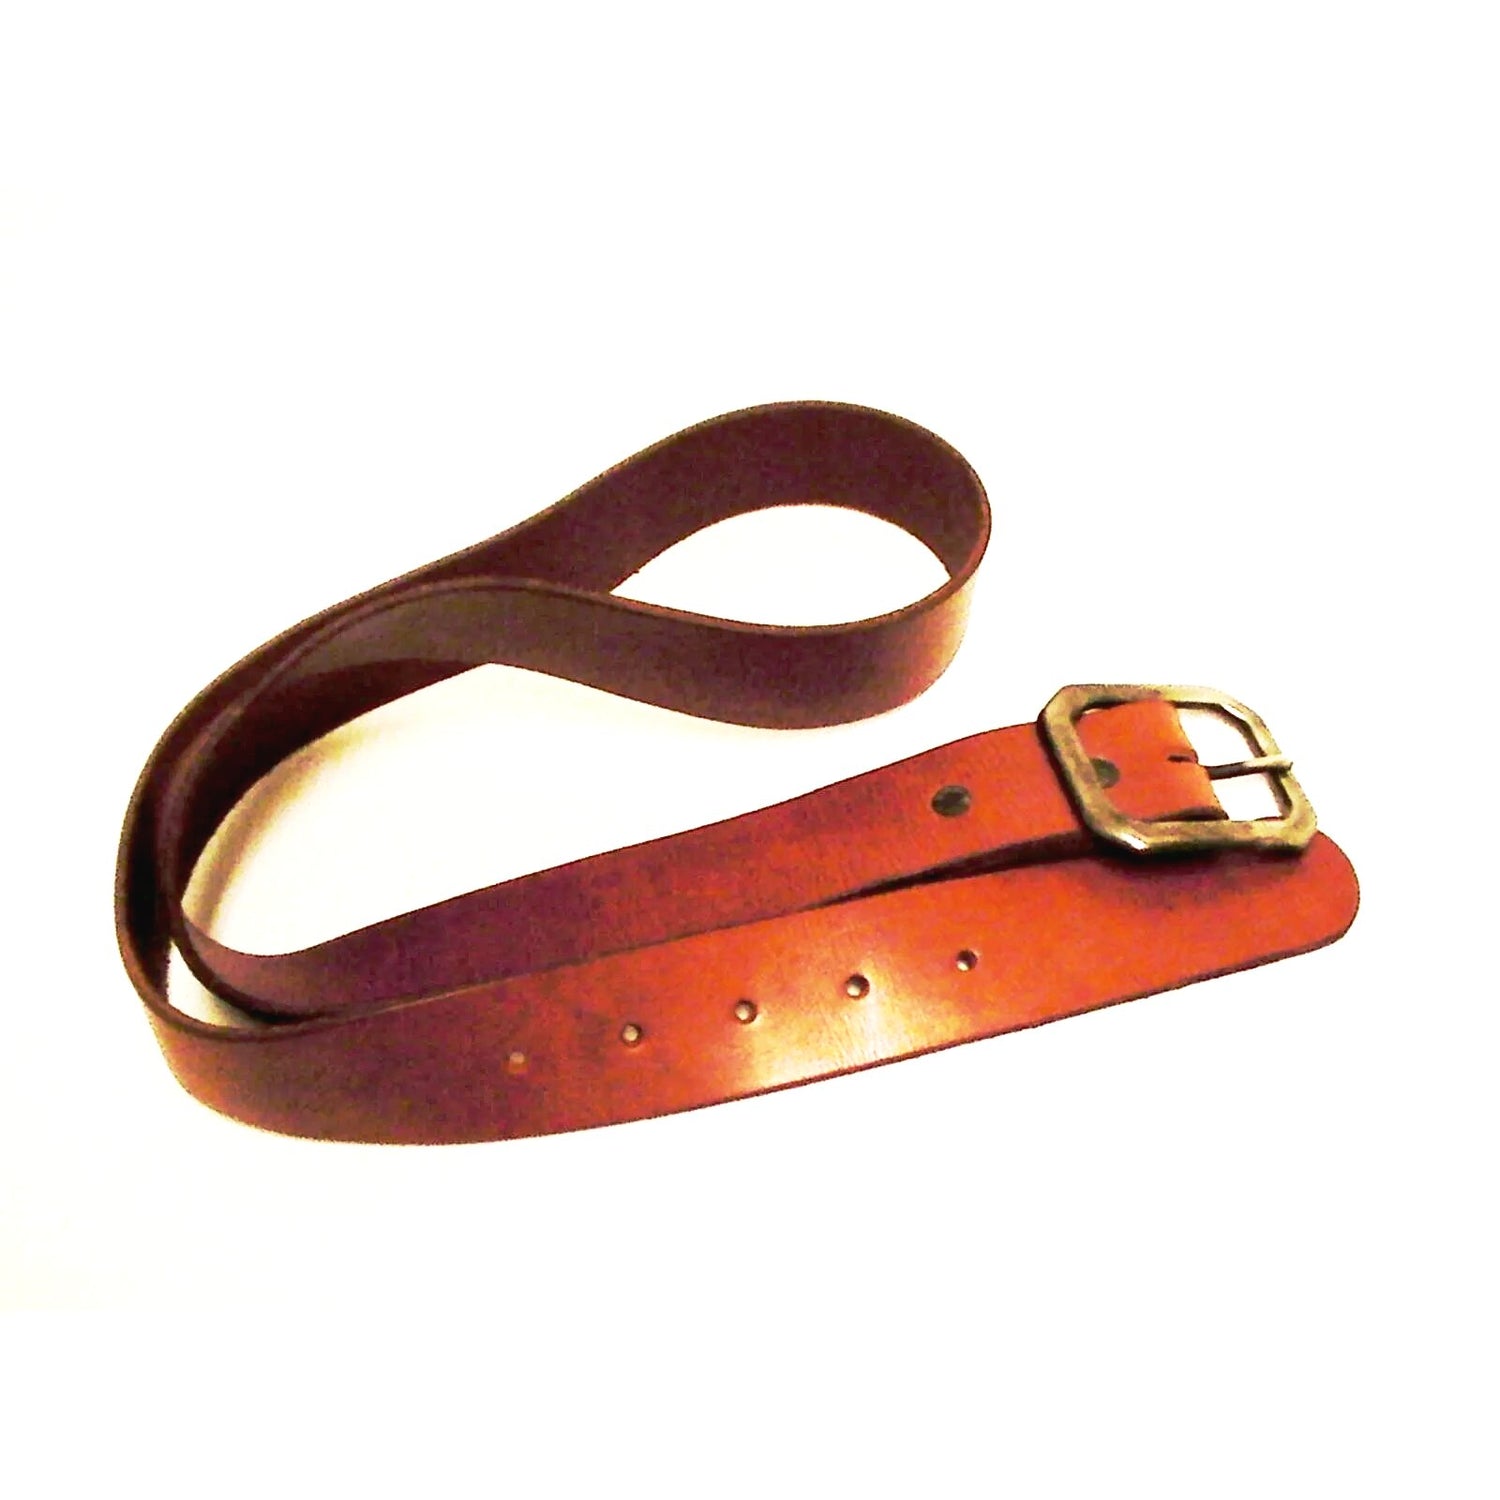 True religion genuine leather belt gunmetal buckle size 34 inch tan color new